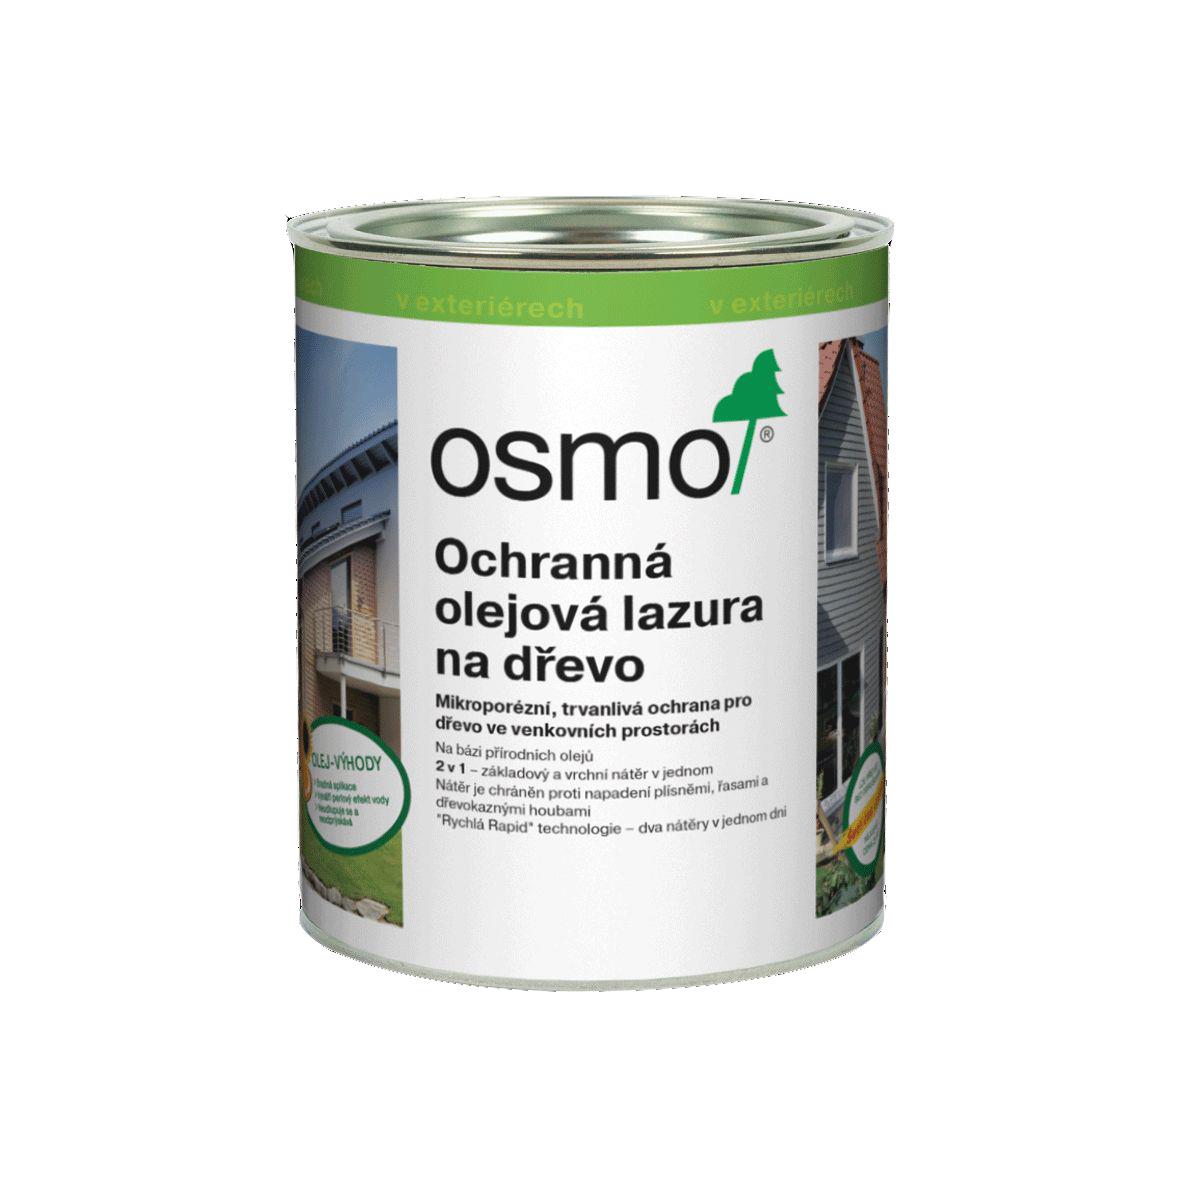 OSMO Ochranná olejová lazura 703 mahagon 0,75l